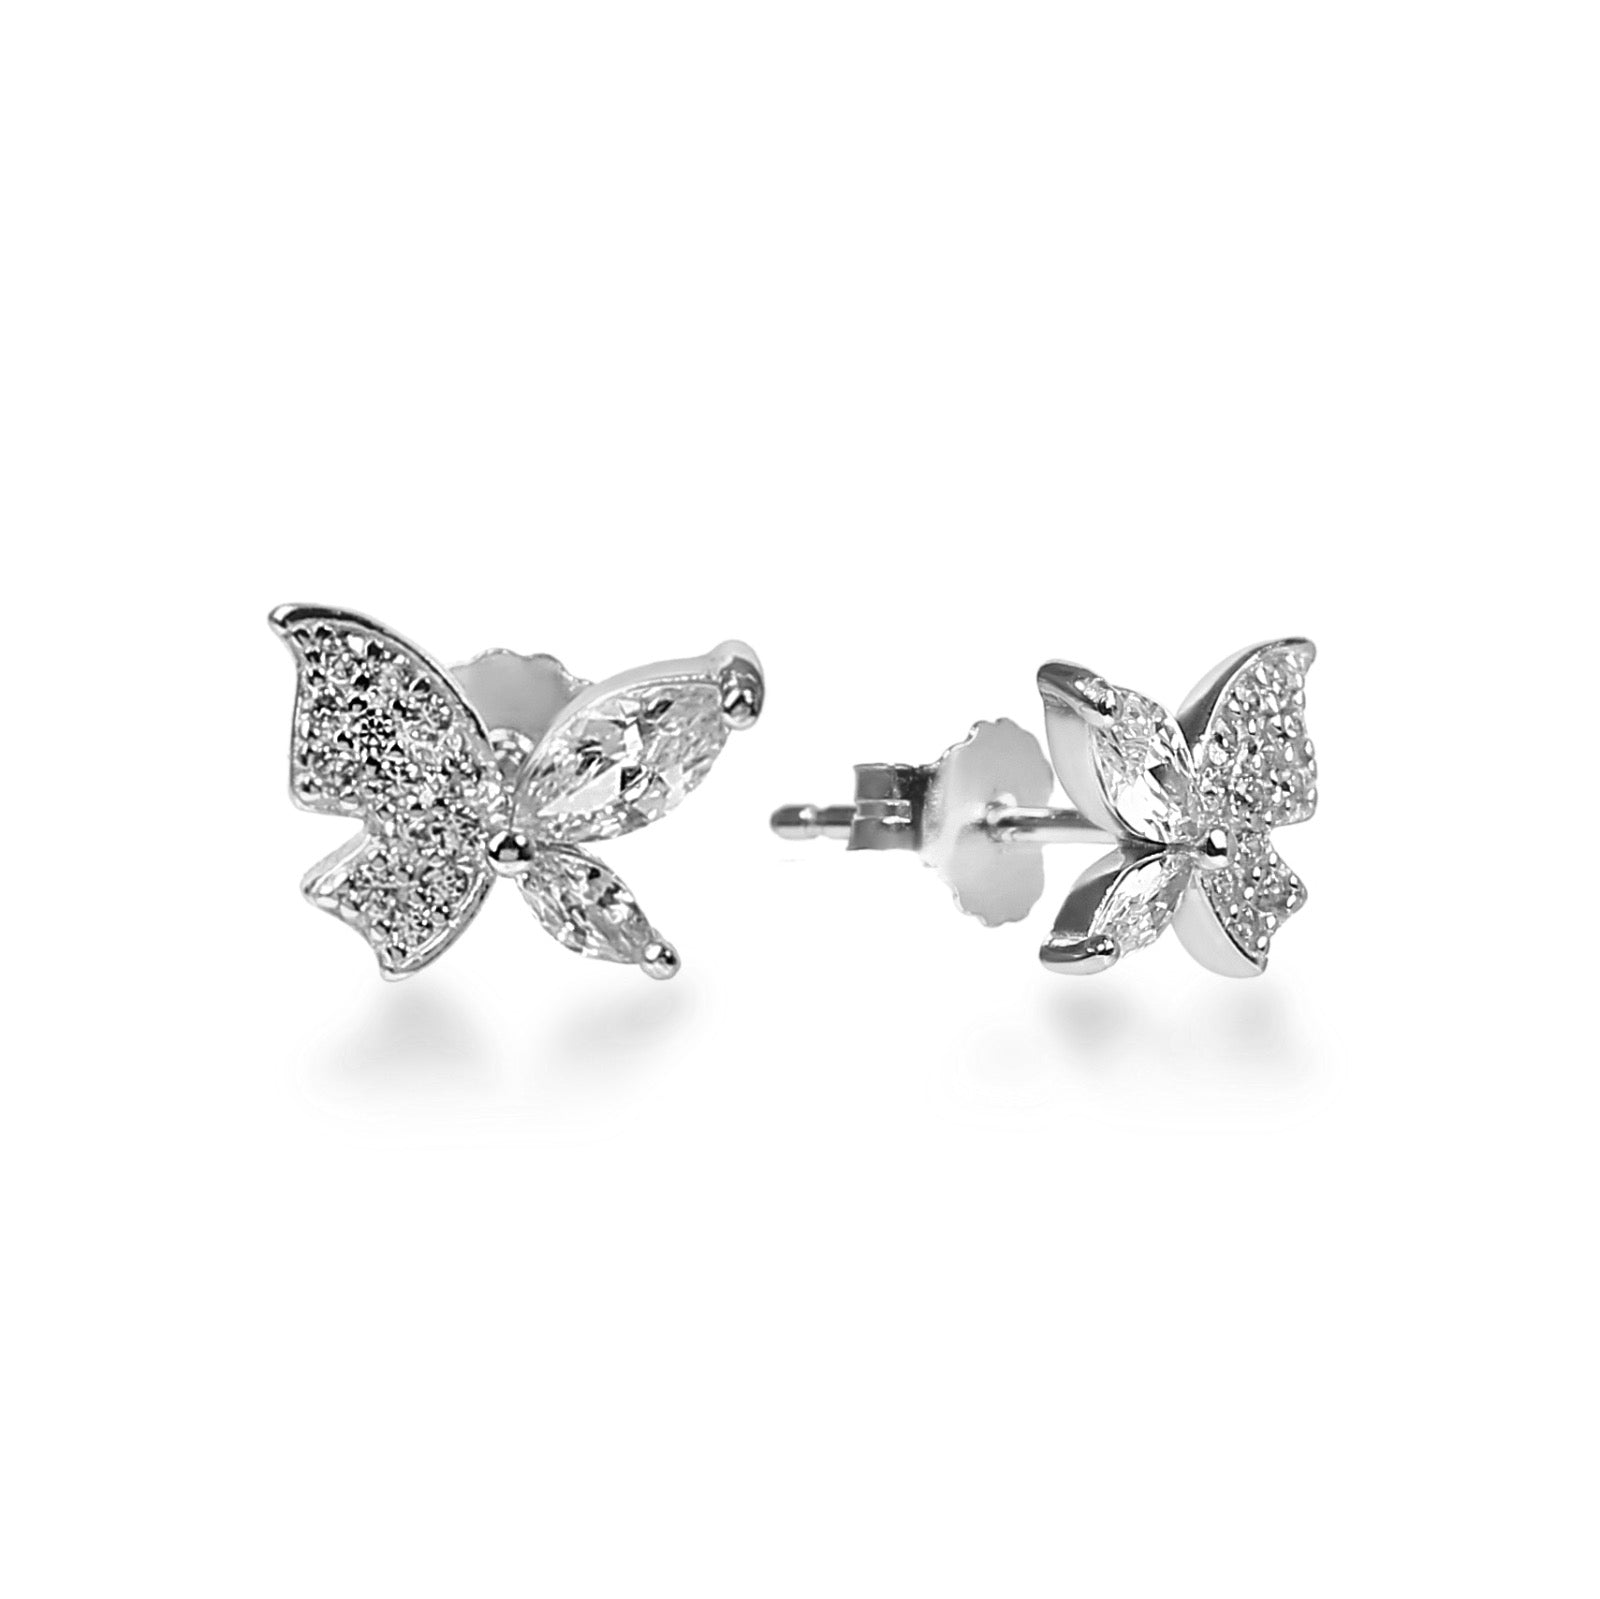 Beautiful Sterling Silver Butterfly Earrings with Zirconia stones.